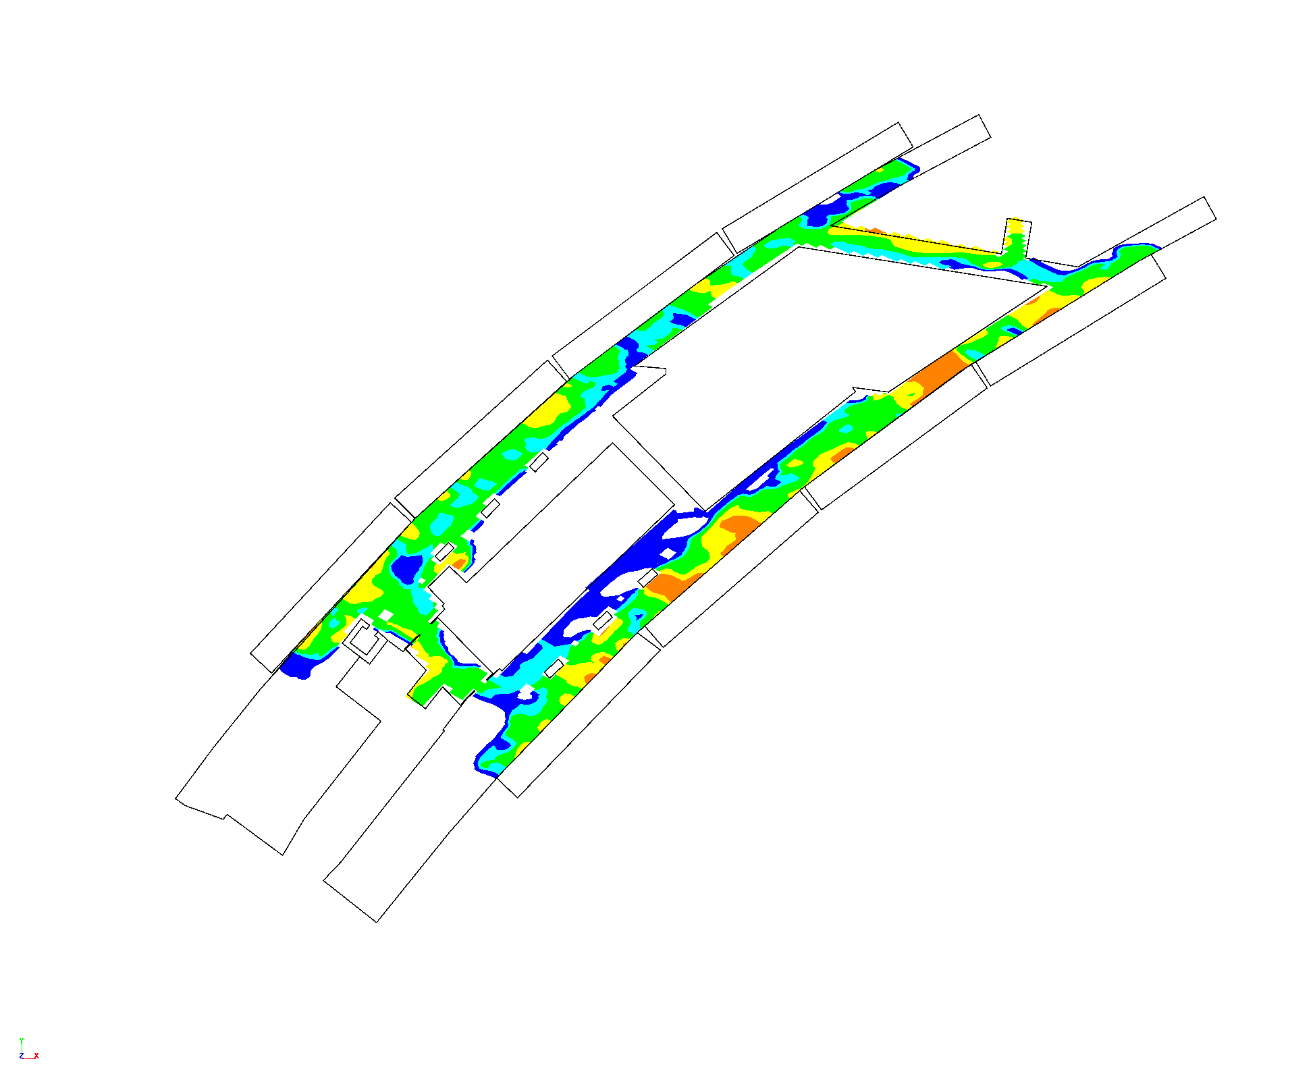 2D Density Underground Station in STEPS pedestrian modelling software